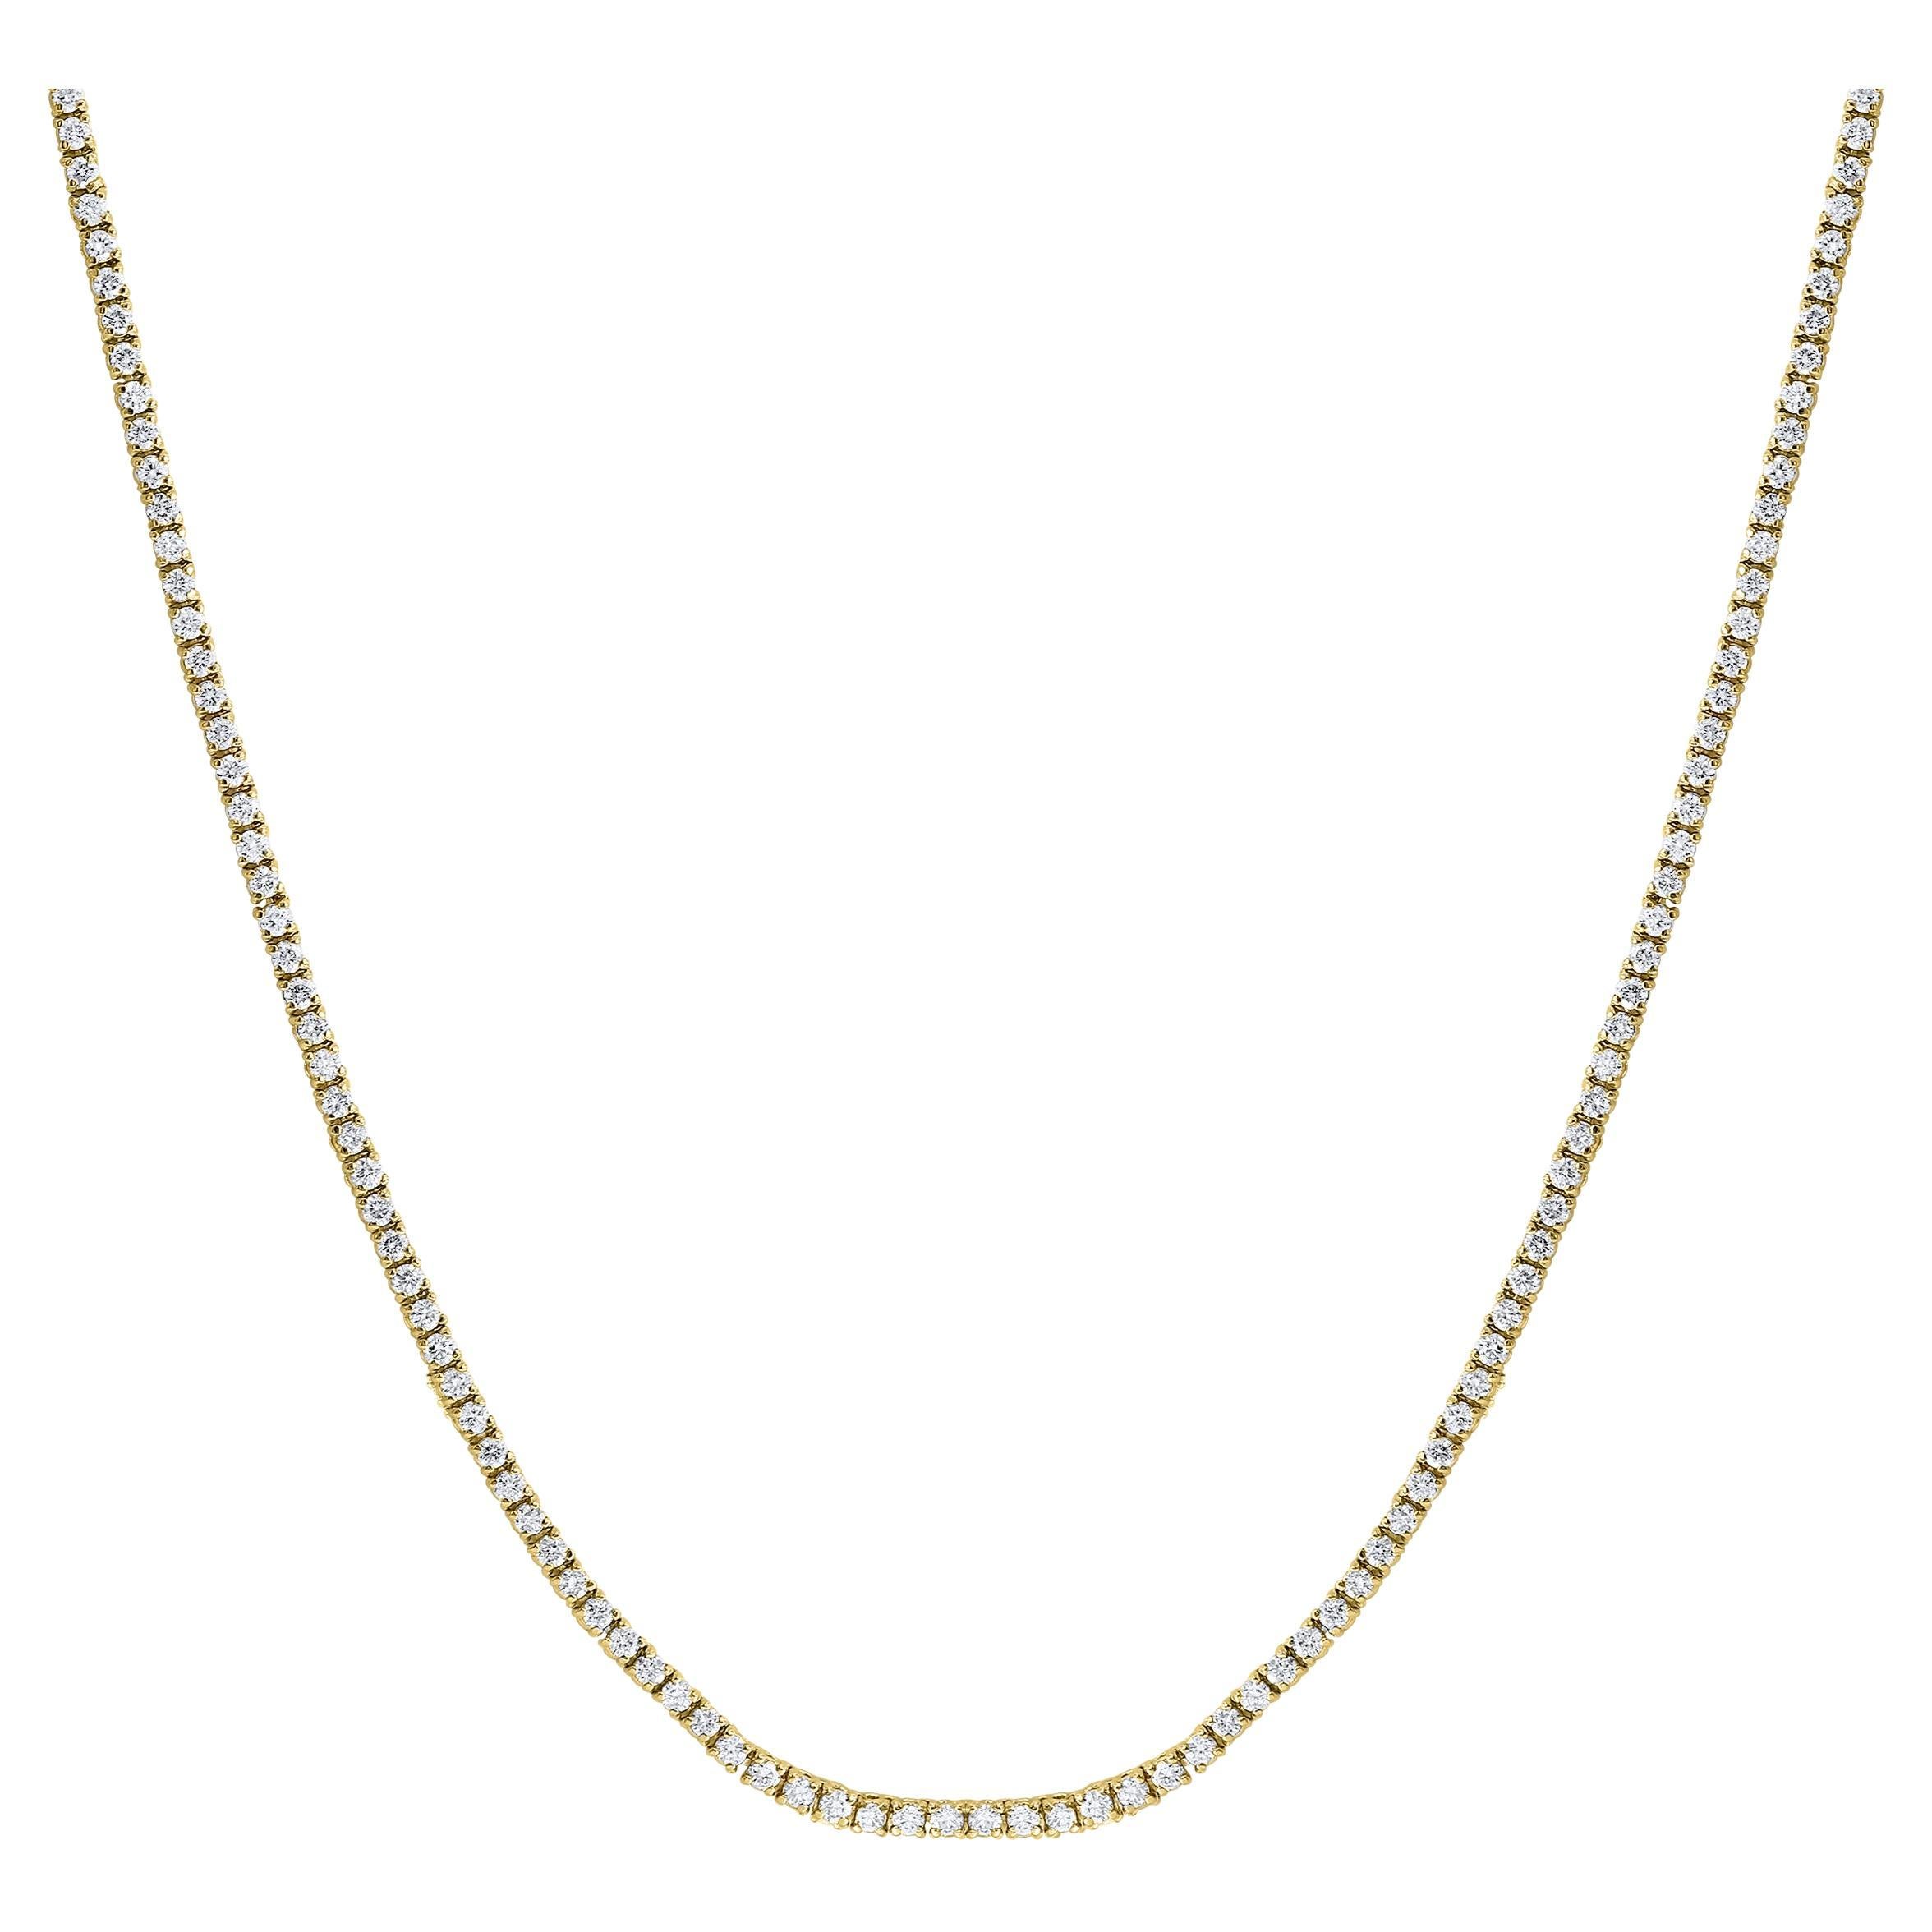 3.01 Carat Diamond Tennis Necklace in 14K Yellow Gold